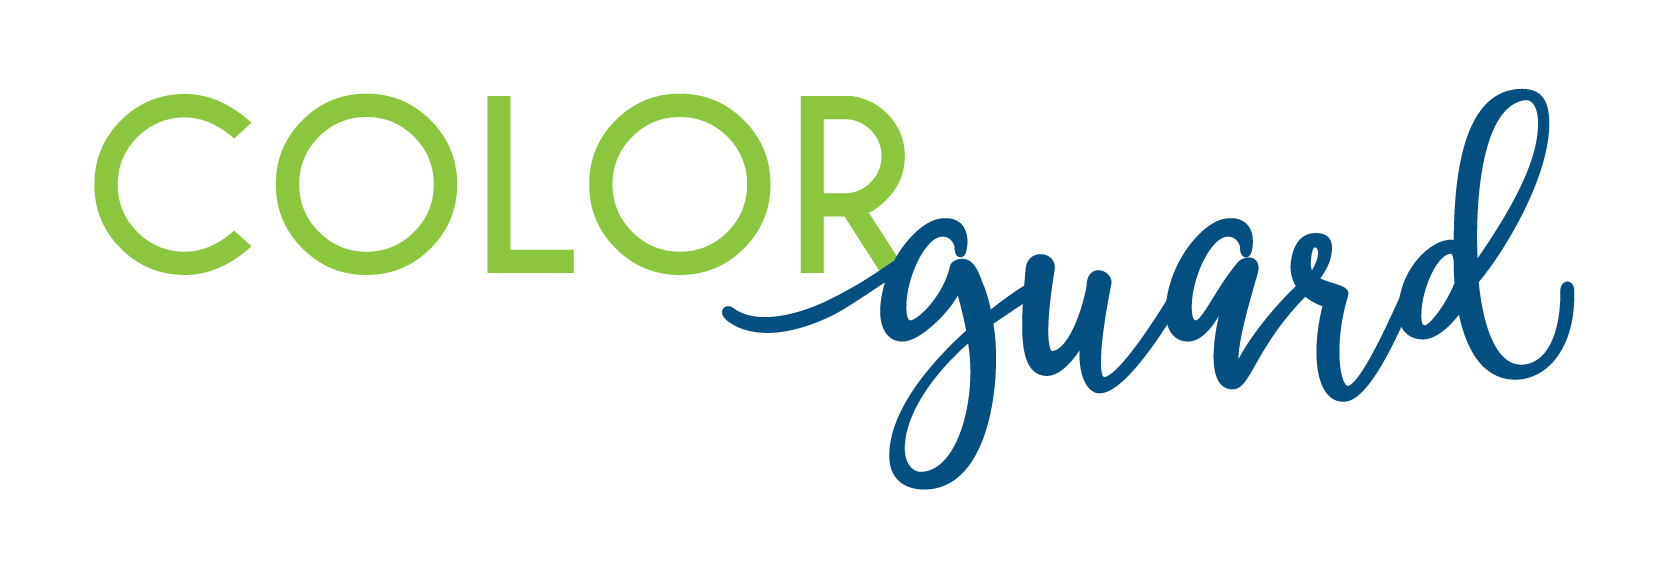 Color Guard Logo Marching Arts Education Live webinars